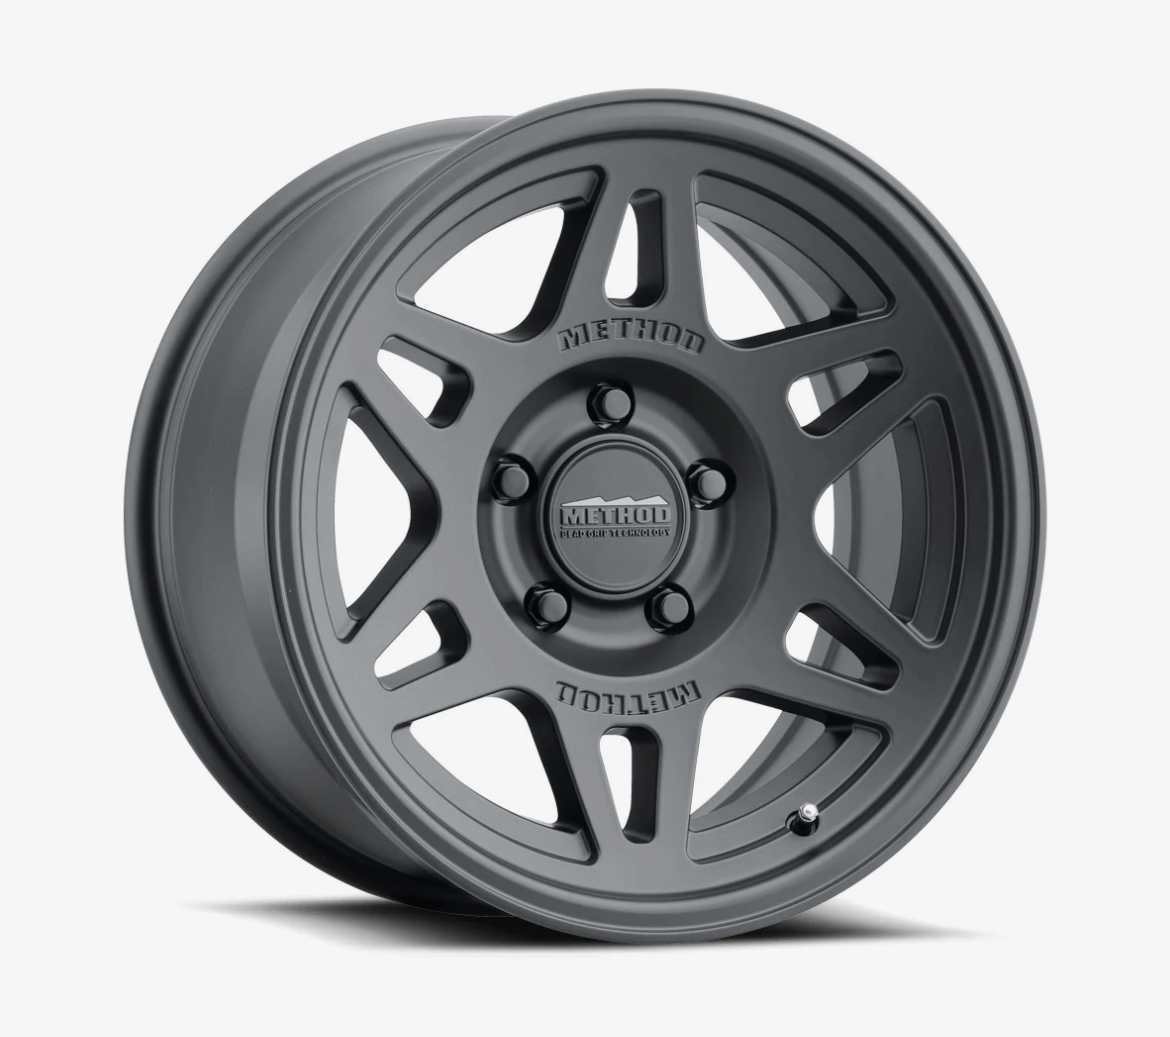 Ford Bronco Which Method wheels do you like? 31ECBEE8-44B9-444C-A313-1F925ACC52B8